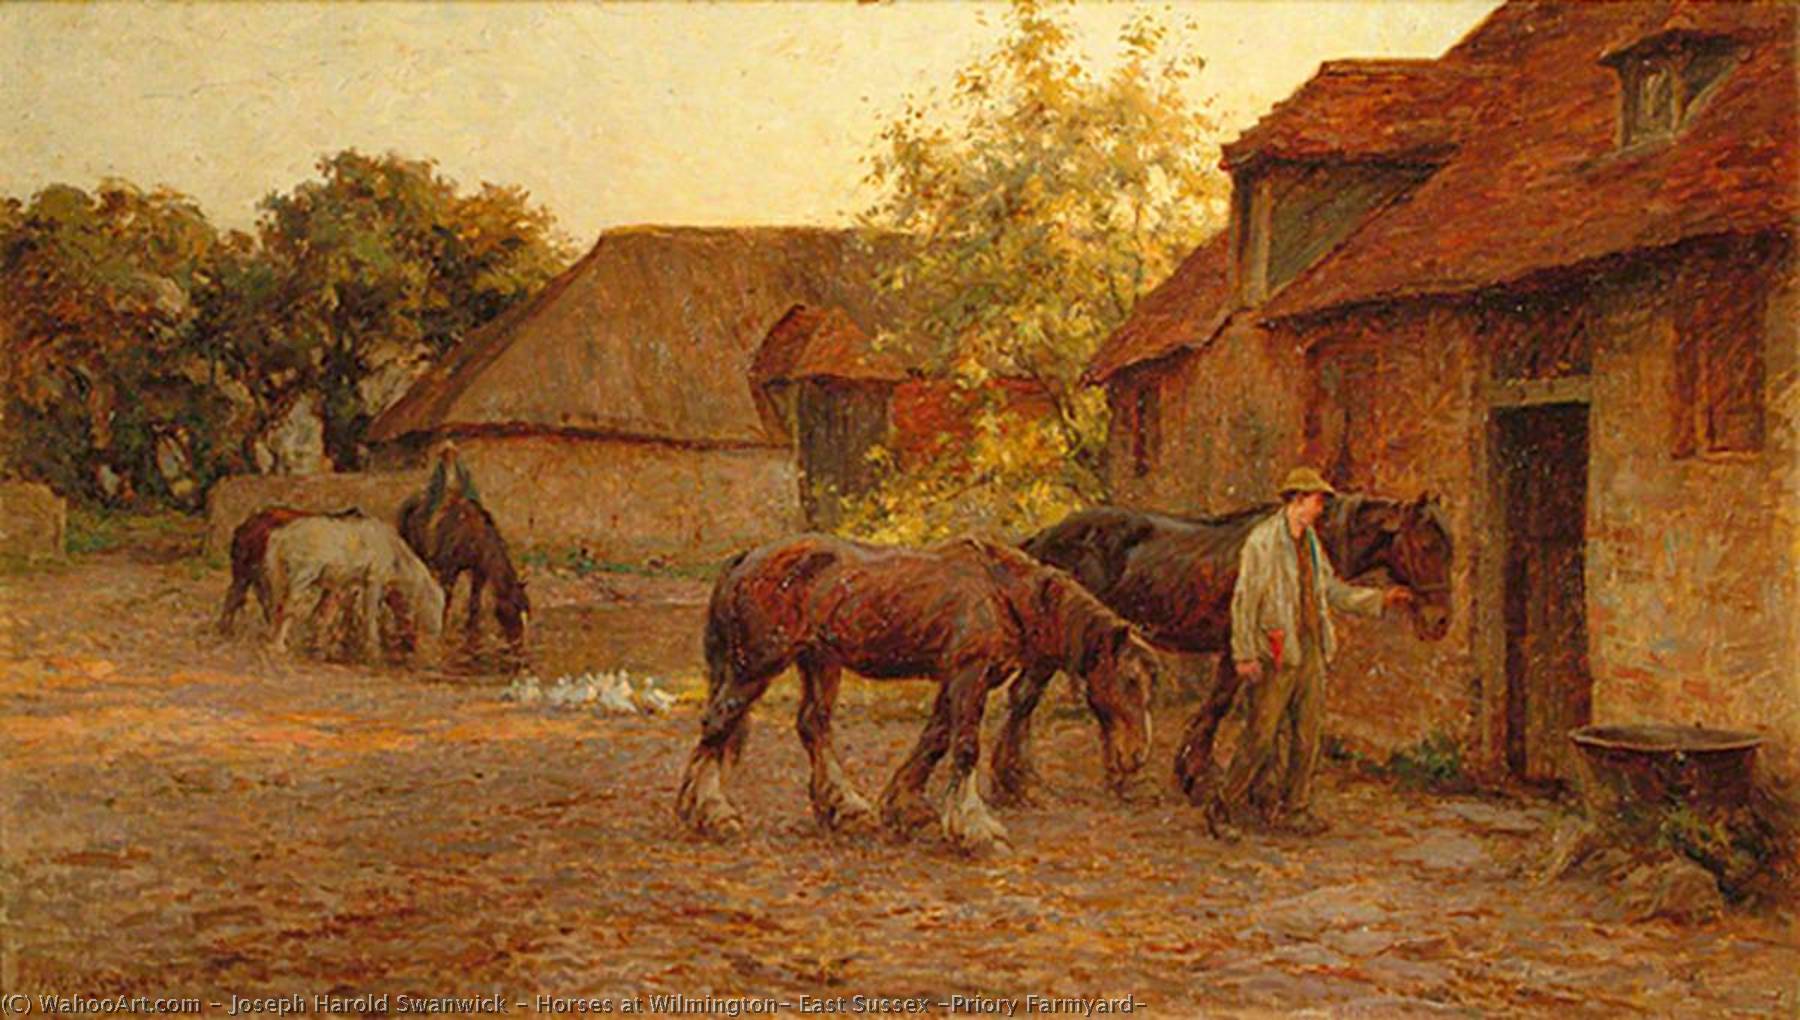 Order Oil Painting Replica Horses at Wilmington, East Sussex (Priory Farmyard) by Joseph Harold Swanwick (1866-1929) | ArtsDot.com